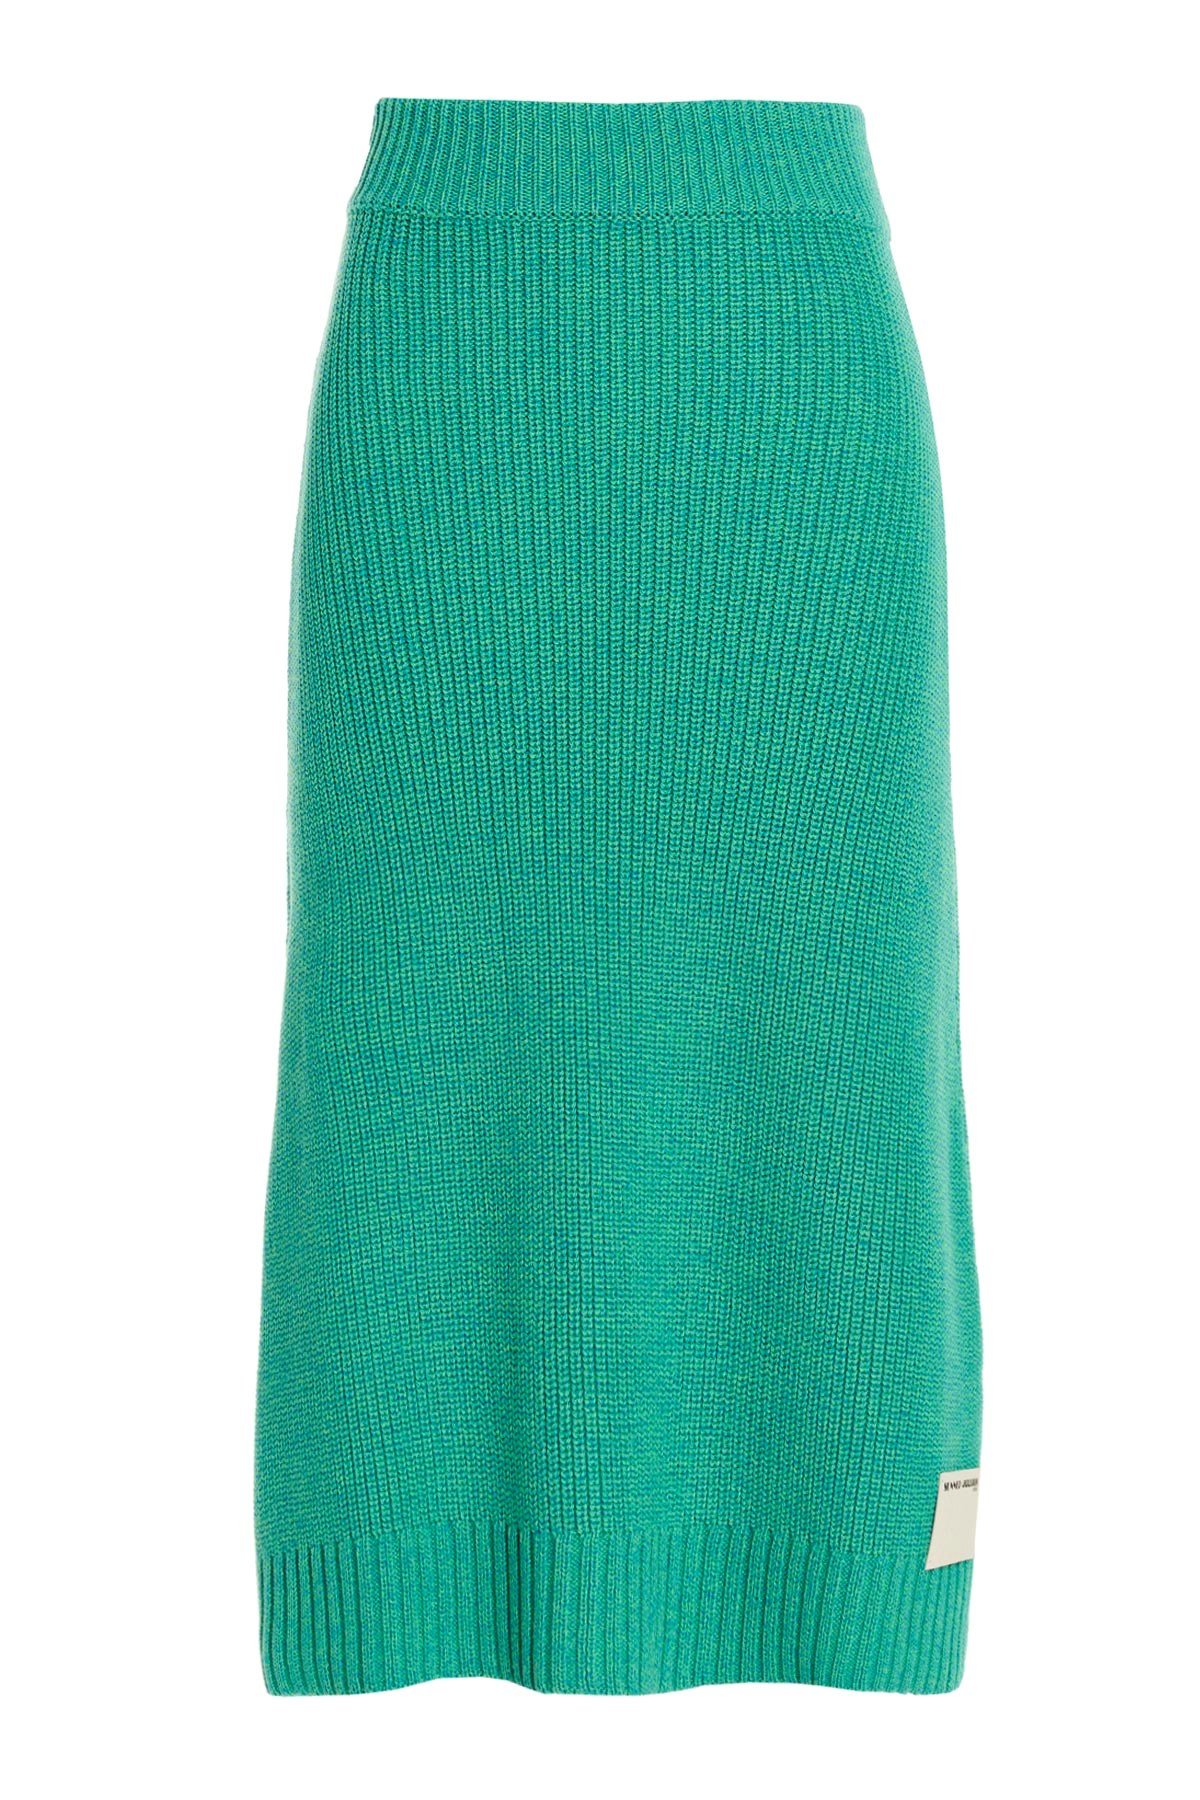 SUNNEI Sunnei Canvas X Julian Fashion Capsule Collection Skirt